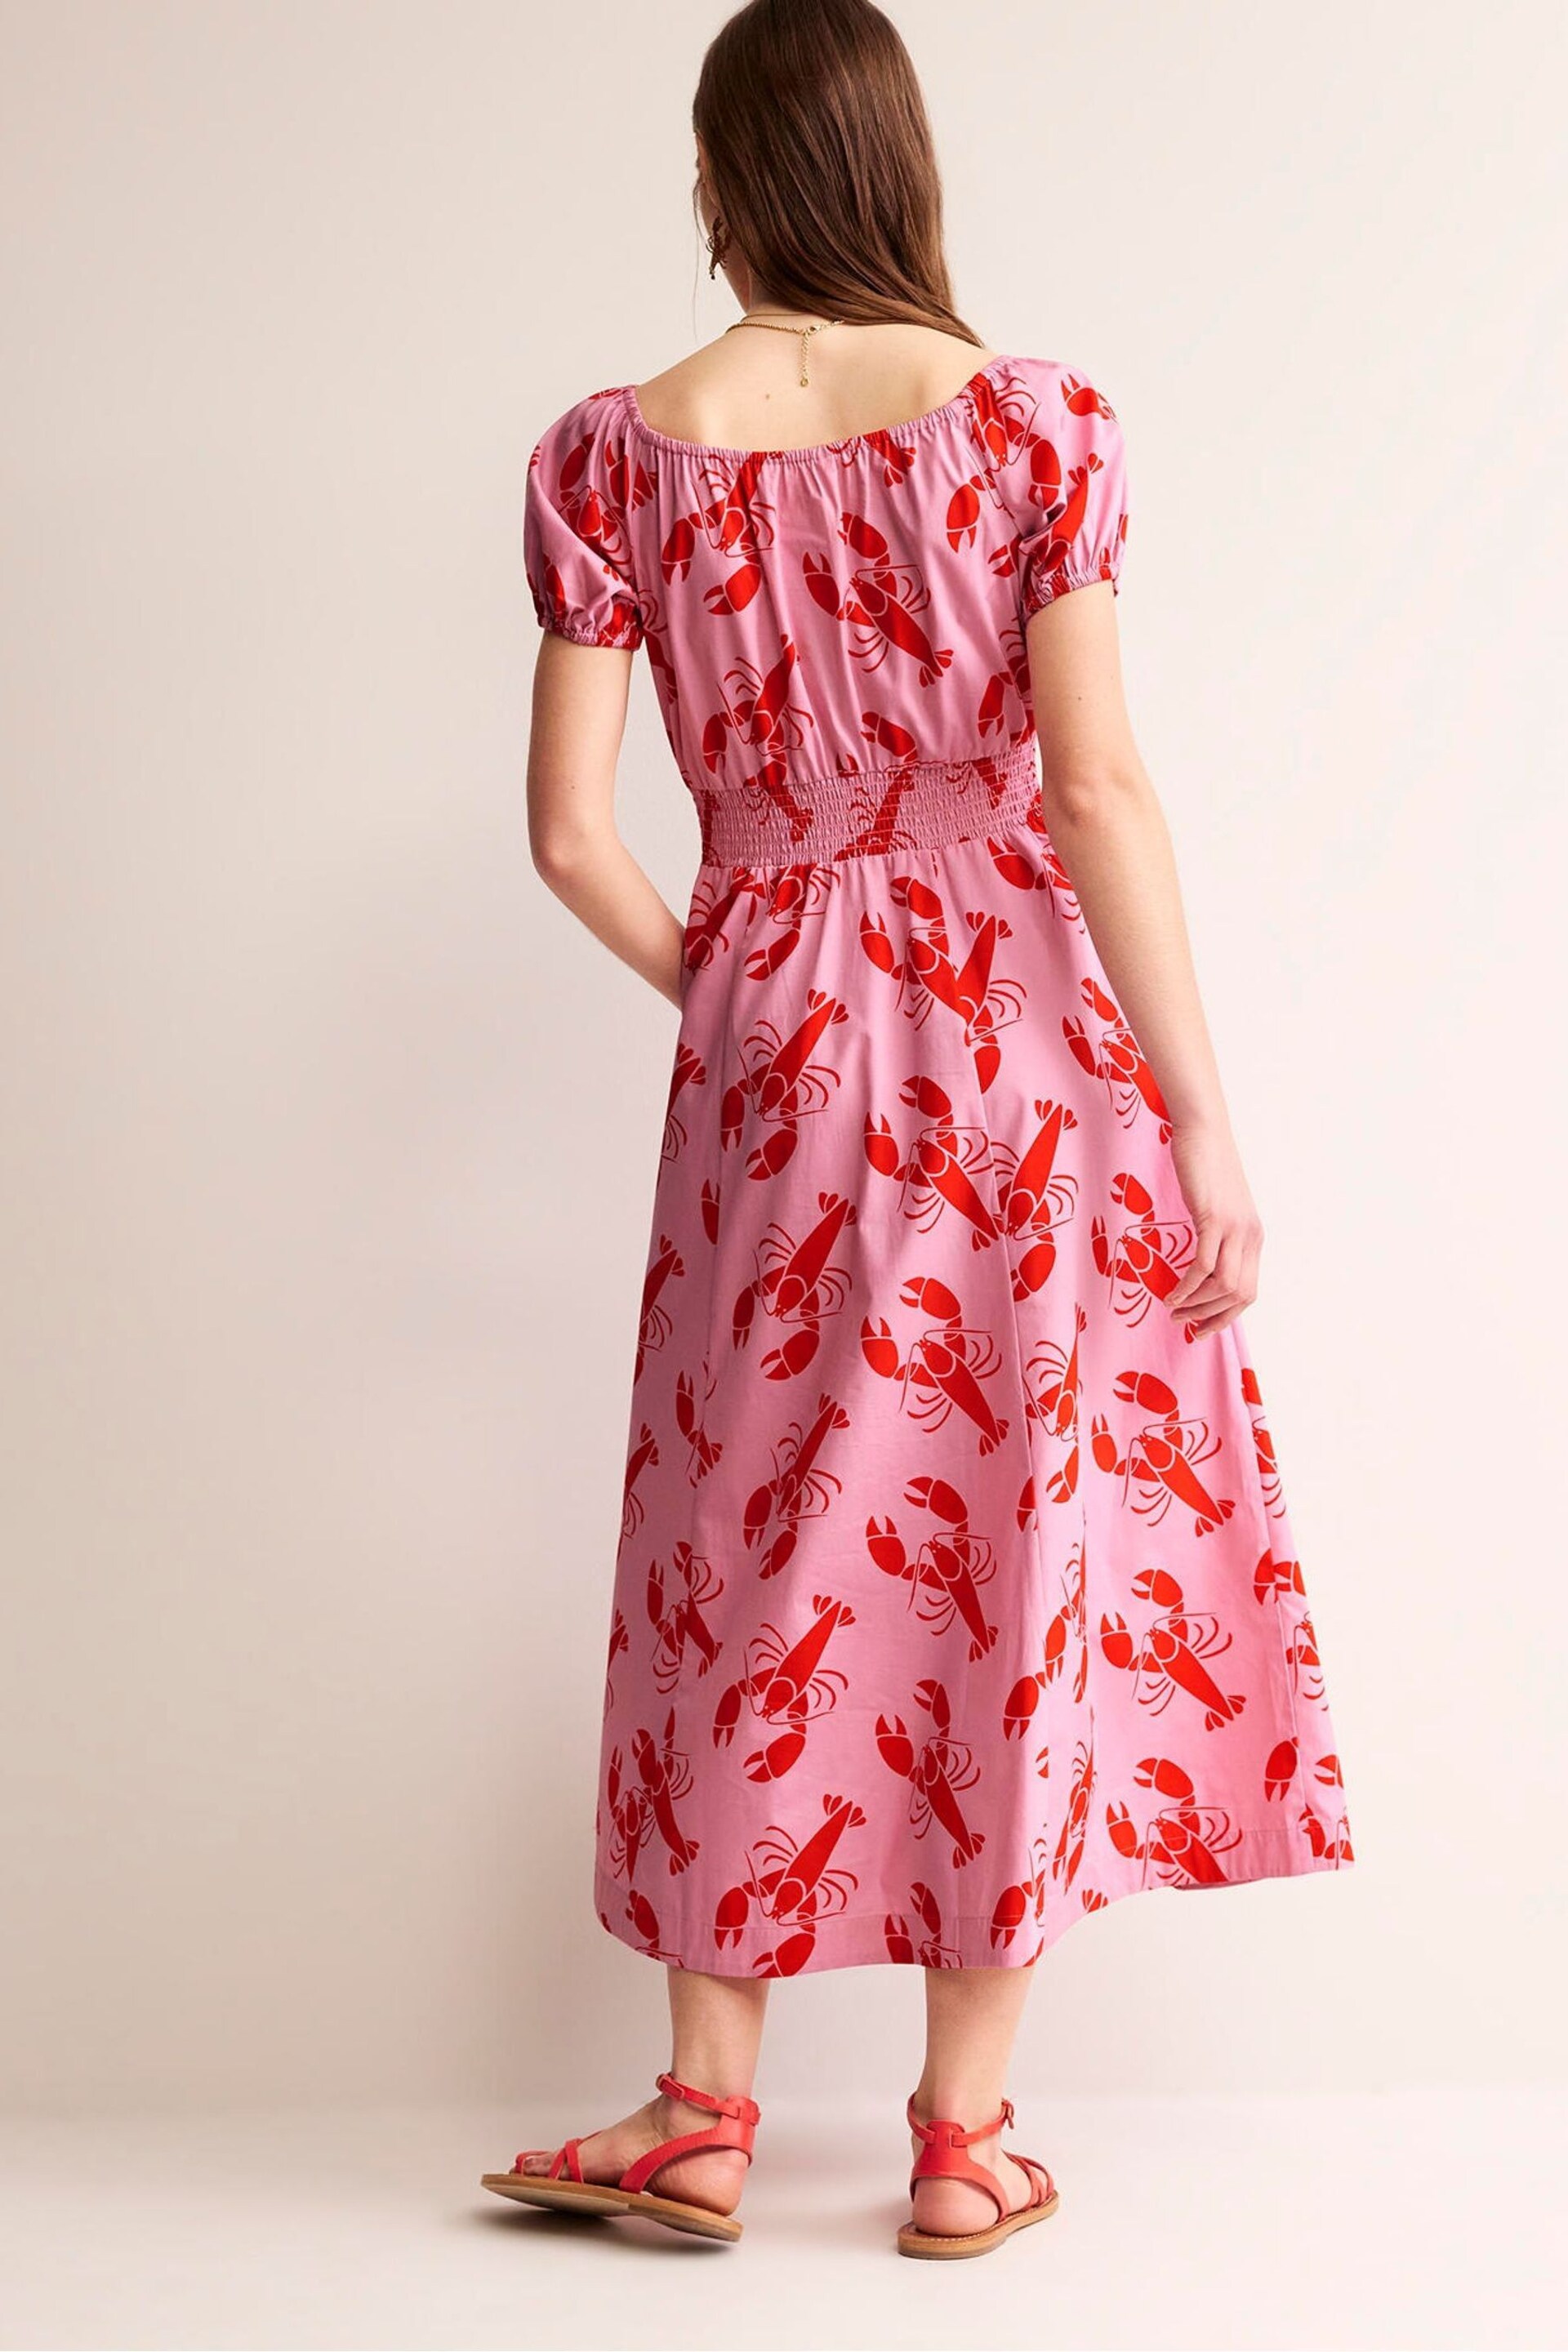 Boden Pink Petite Amber Cotton Midi Dress - Image 3 of 5